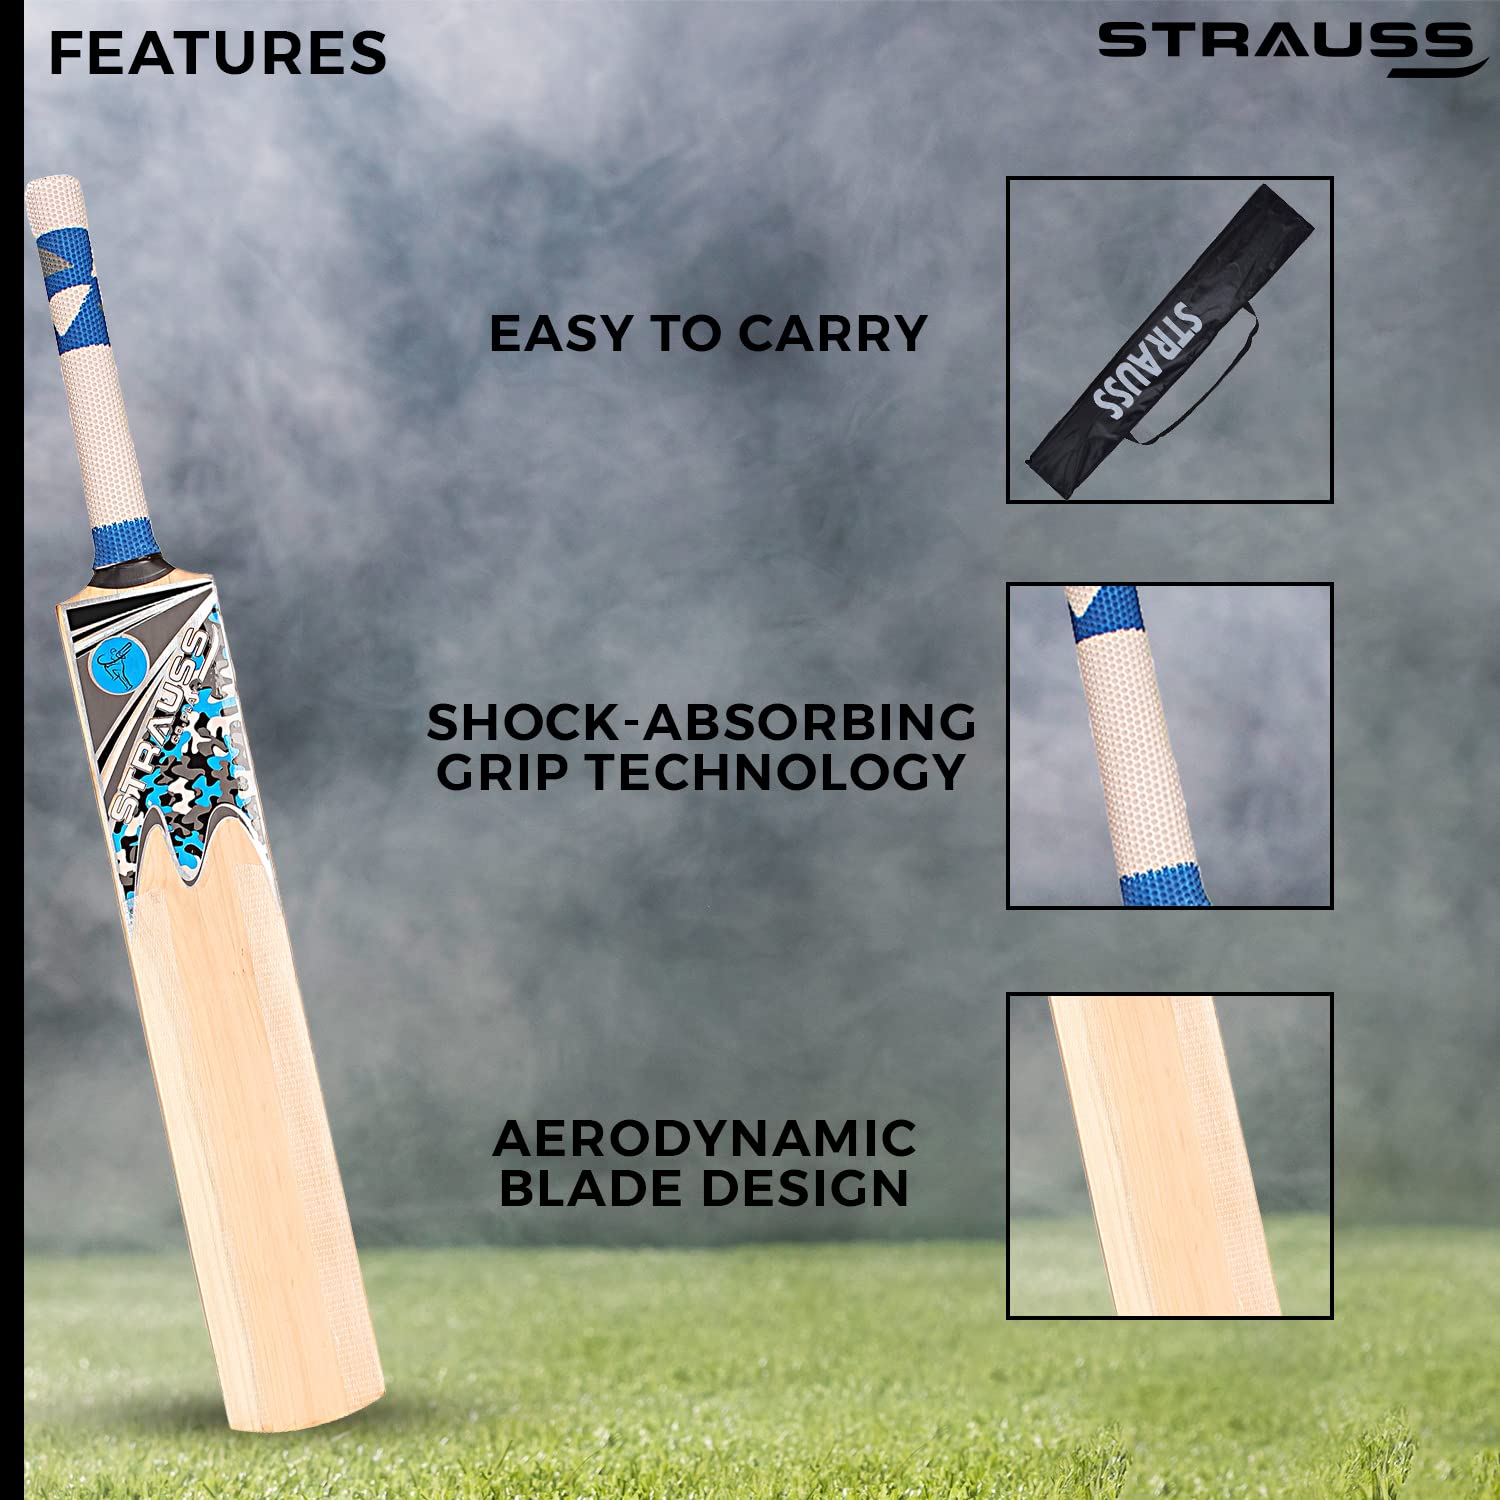 Strauss Scoop Tennis Cricket Bat, Plain, Short Handle, Blue